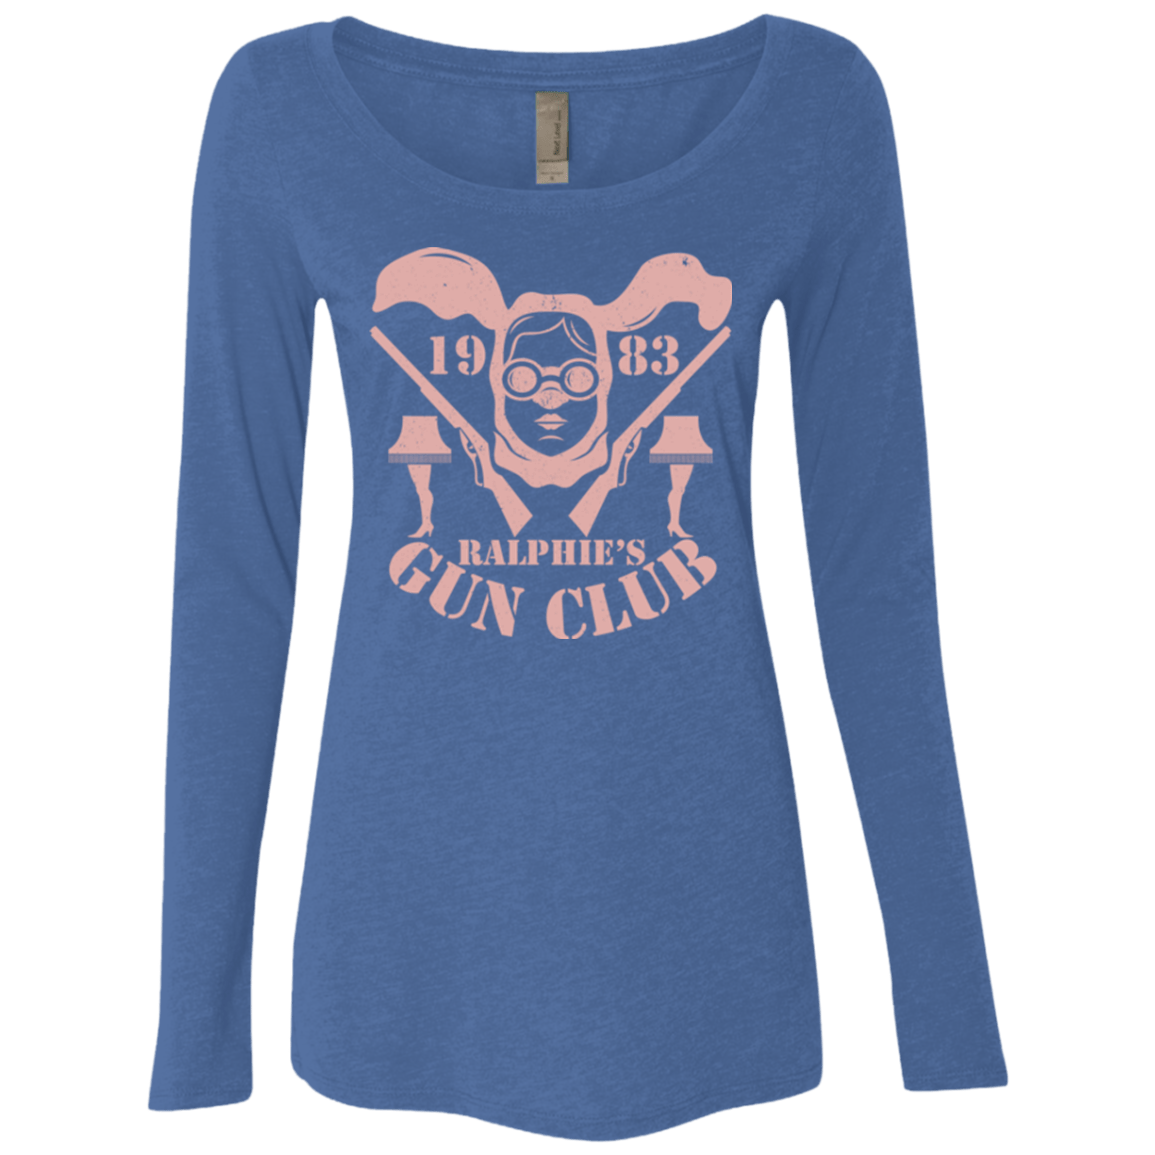 Ralphies Gun Club Women's Triblend Long Sleeve Shirt